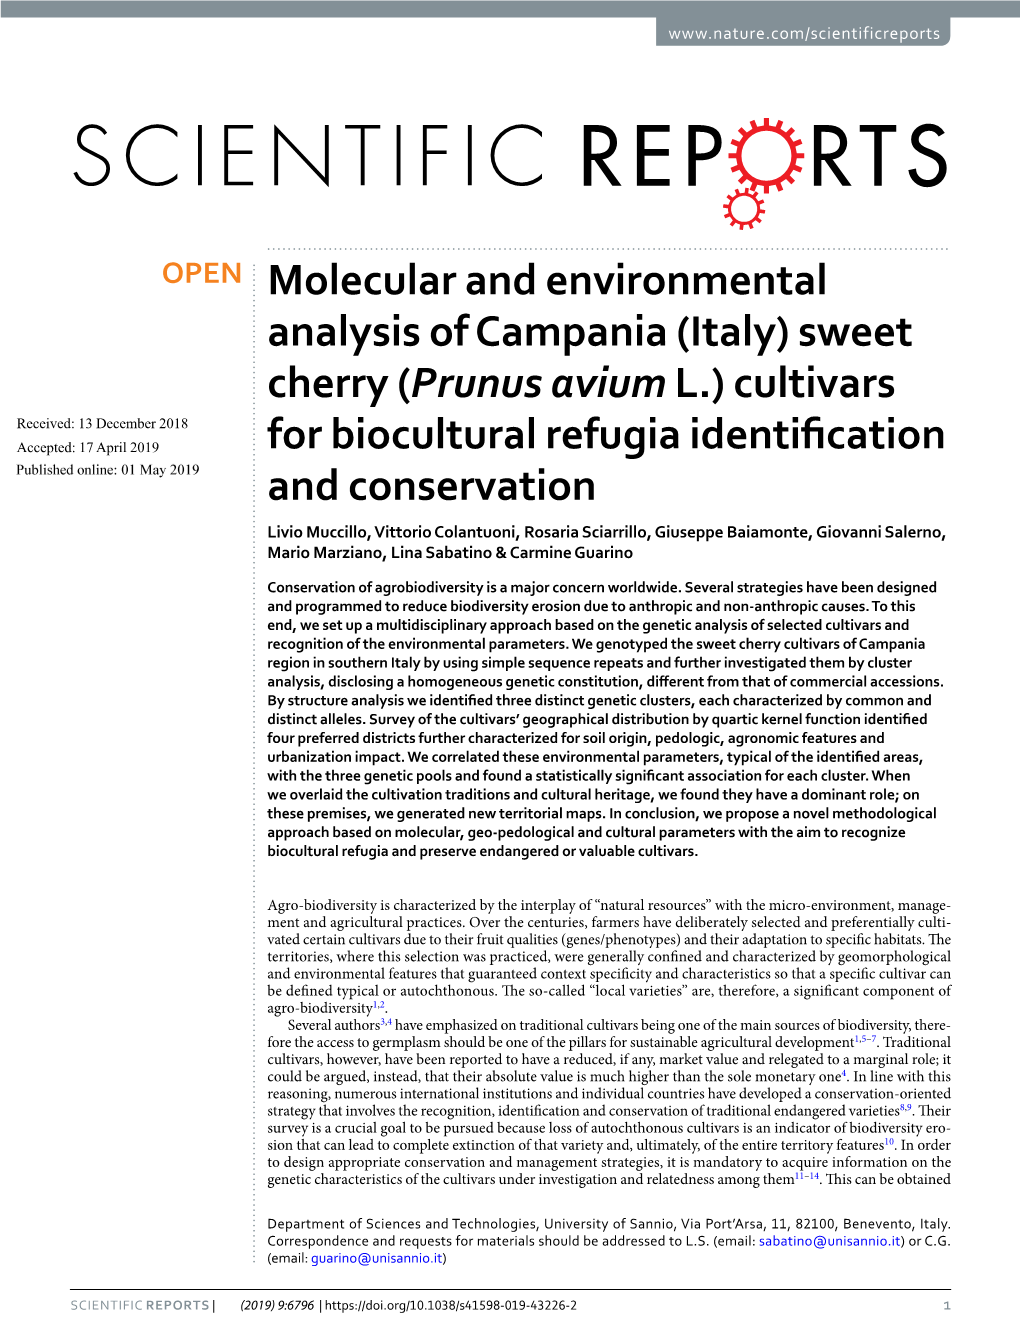 Molecular and Environmental Analysis of Campania (Italy) Sweet Cherry